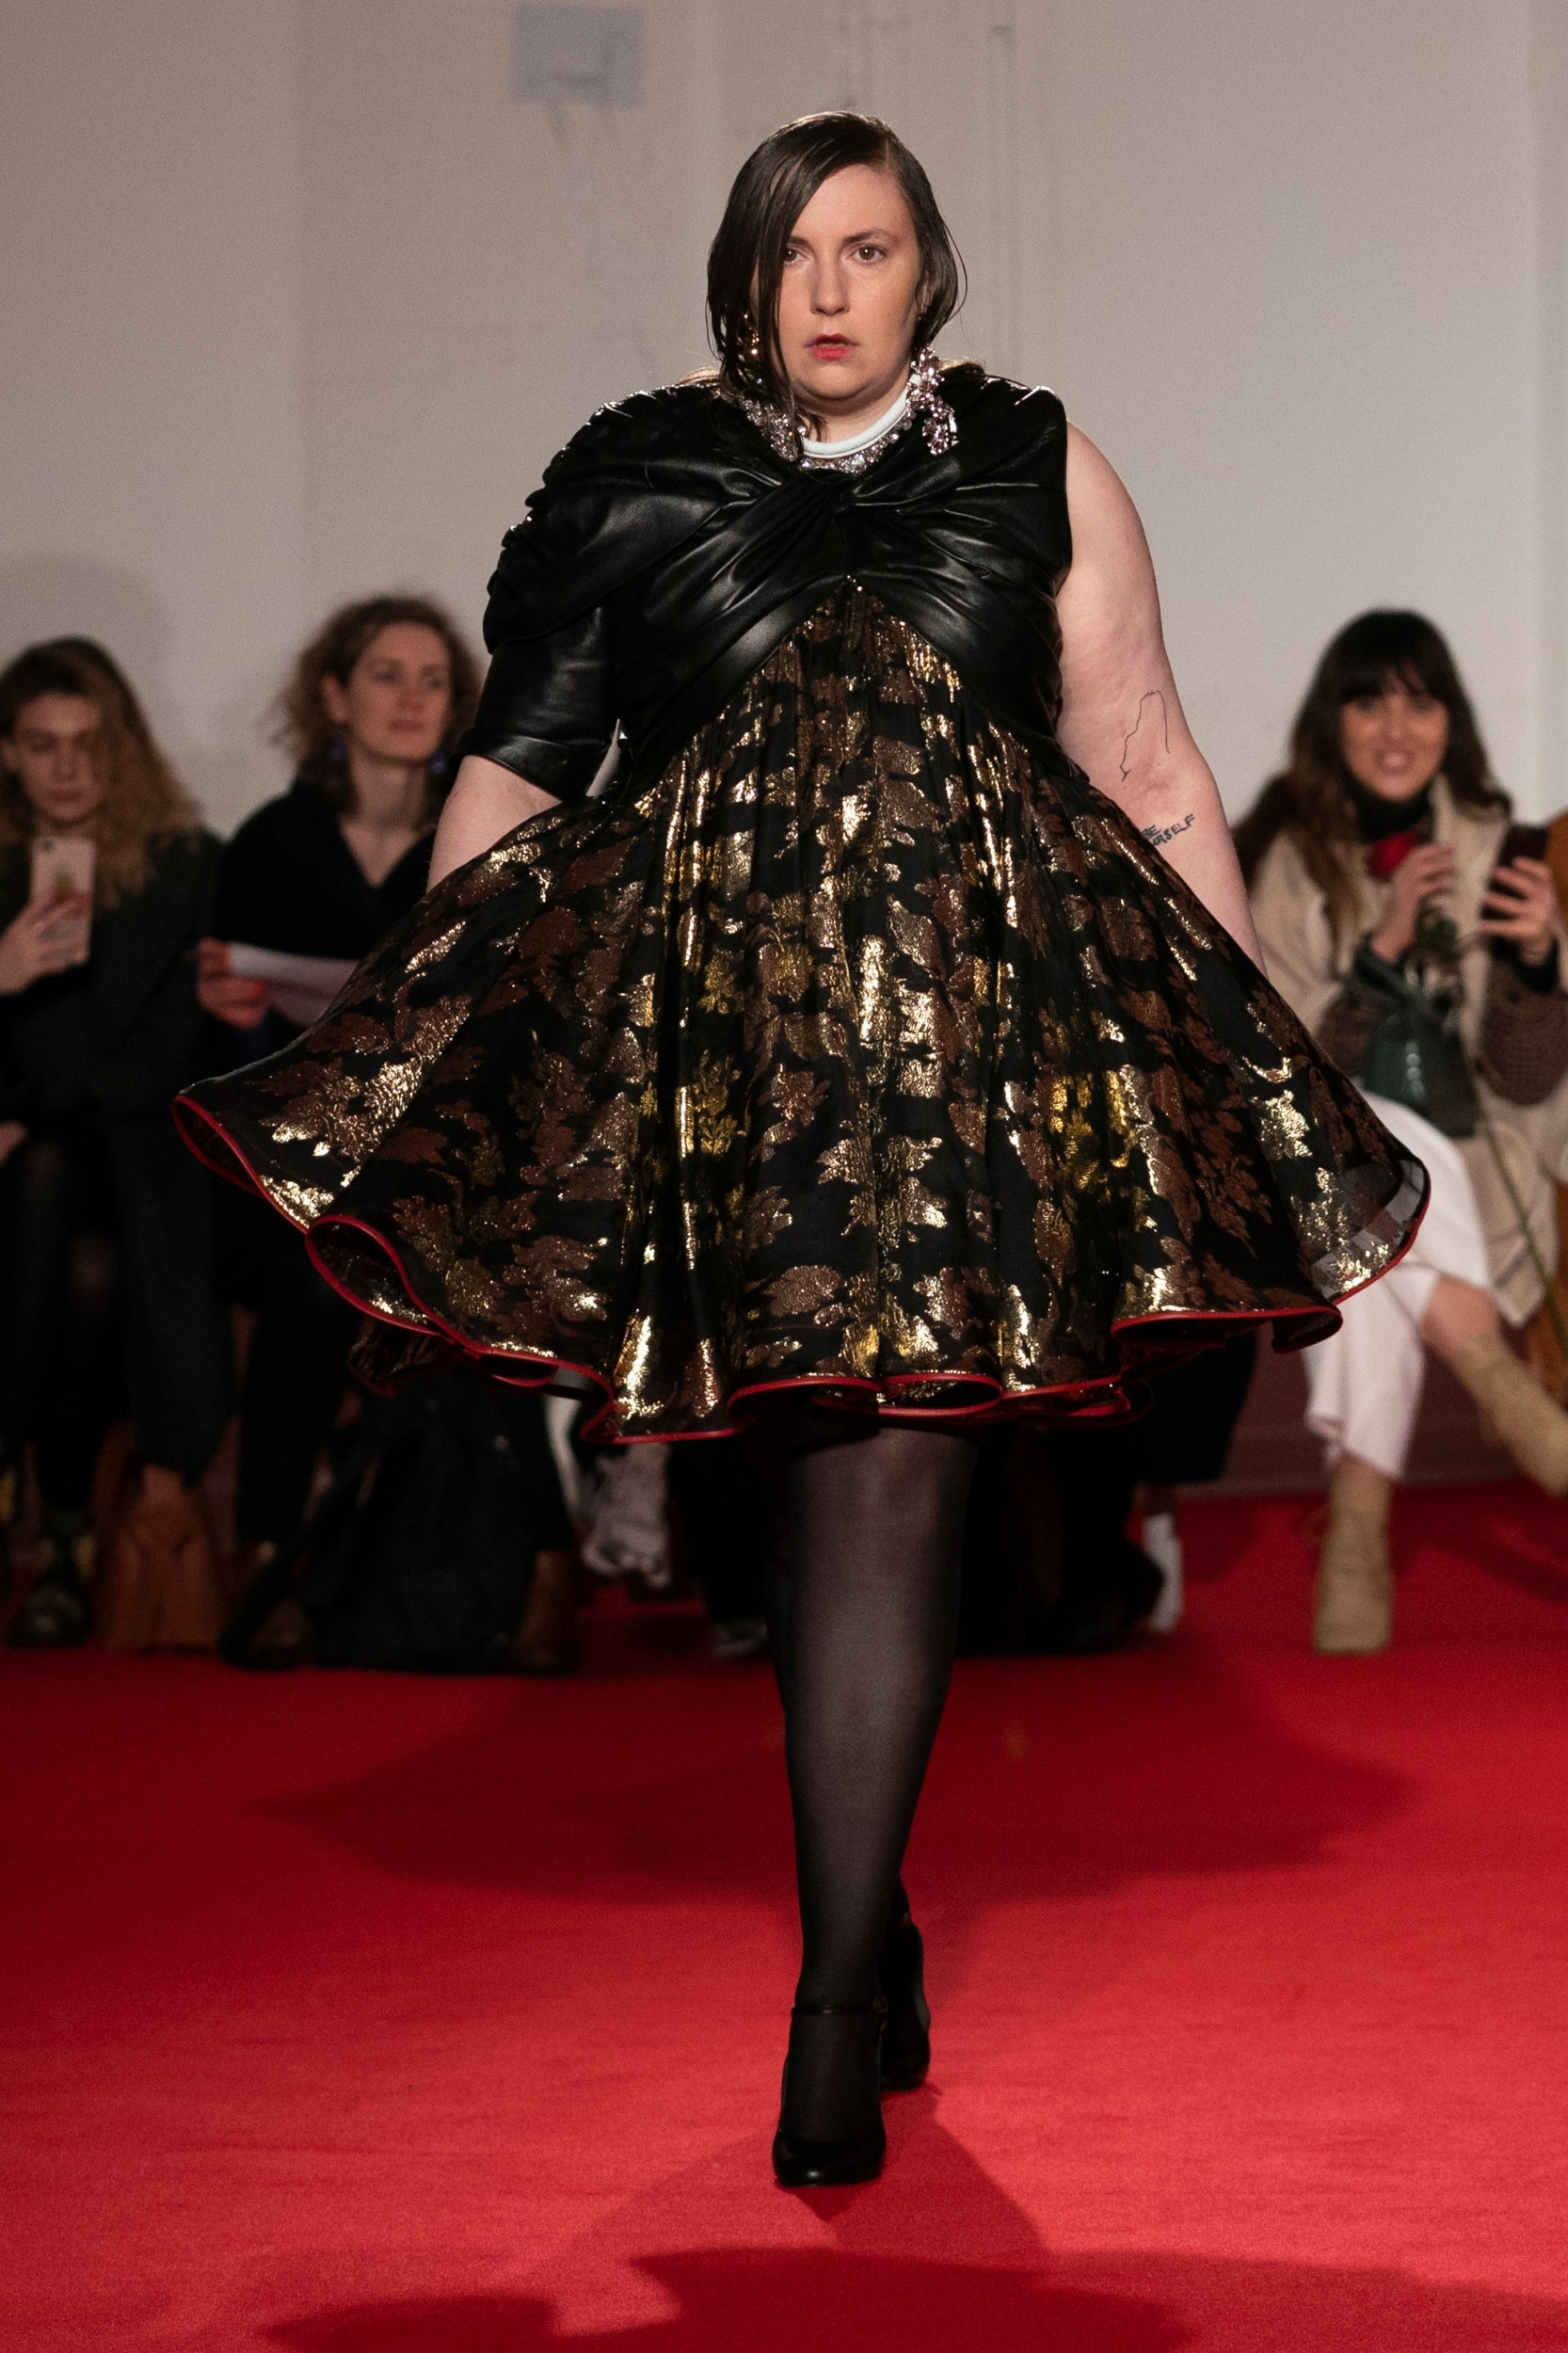 Lena Dunham walks in the 16Arlington show at London Fashion Week